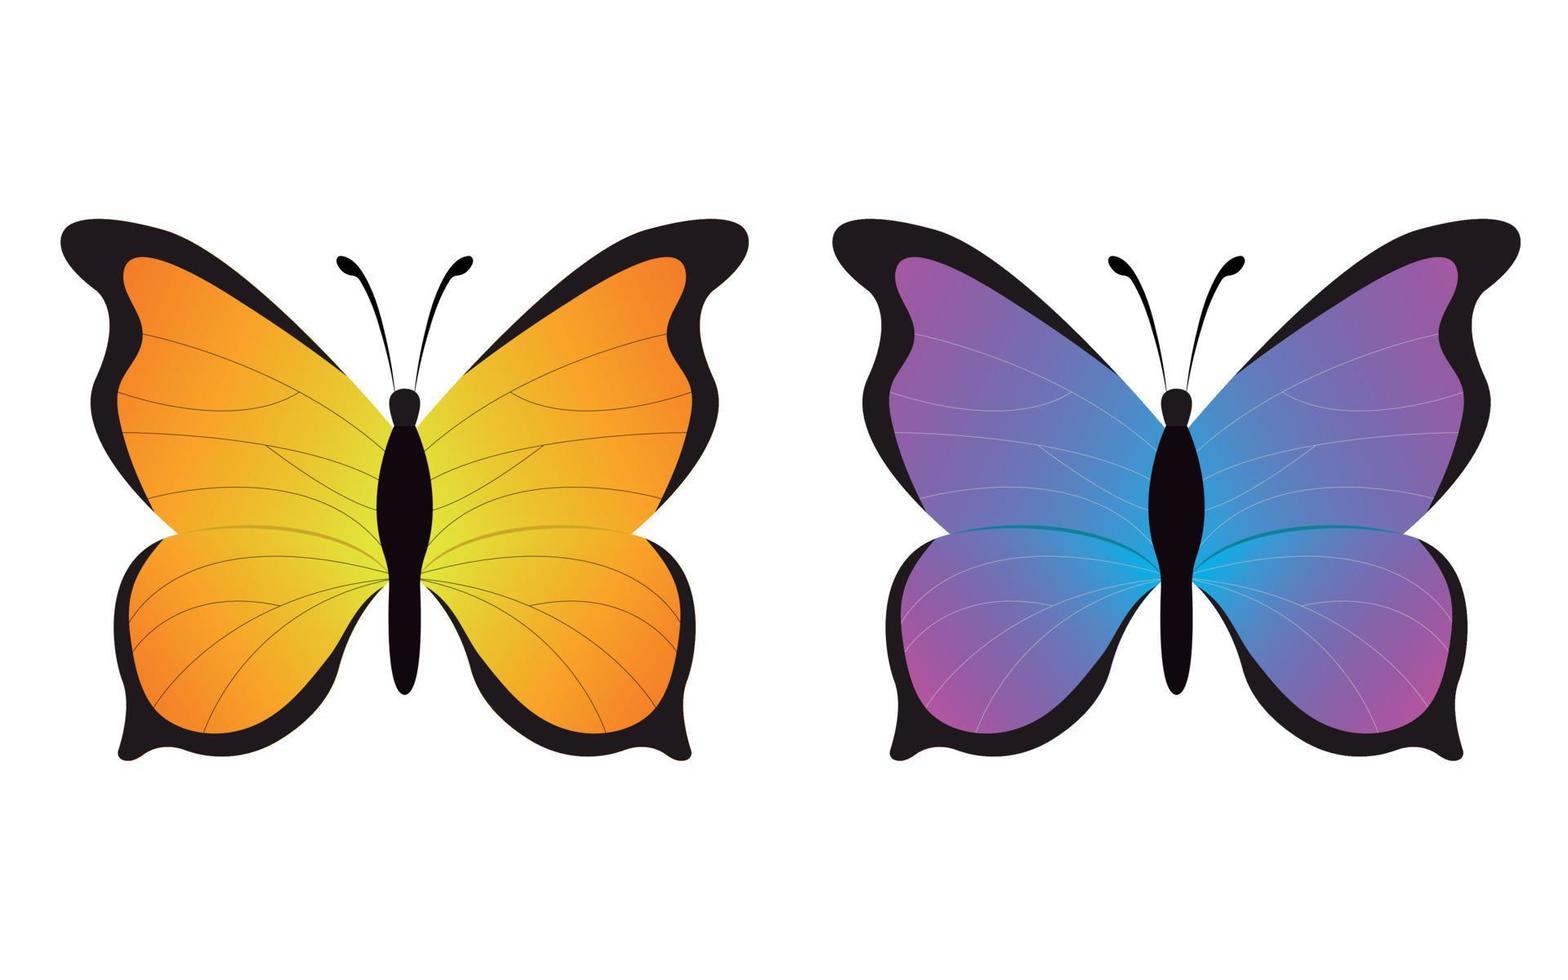 azul roxo e amarelo laranja linda borboleta isolada no fundo branco. ilustração vetorial plana vetor